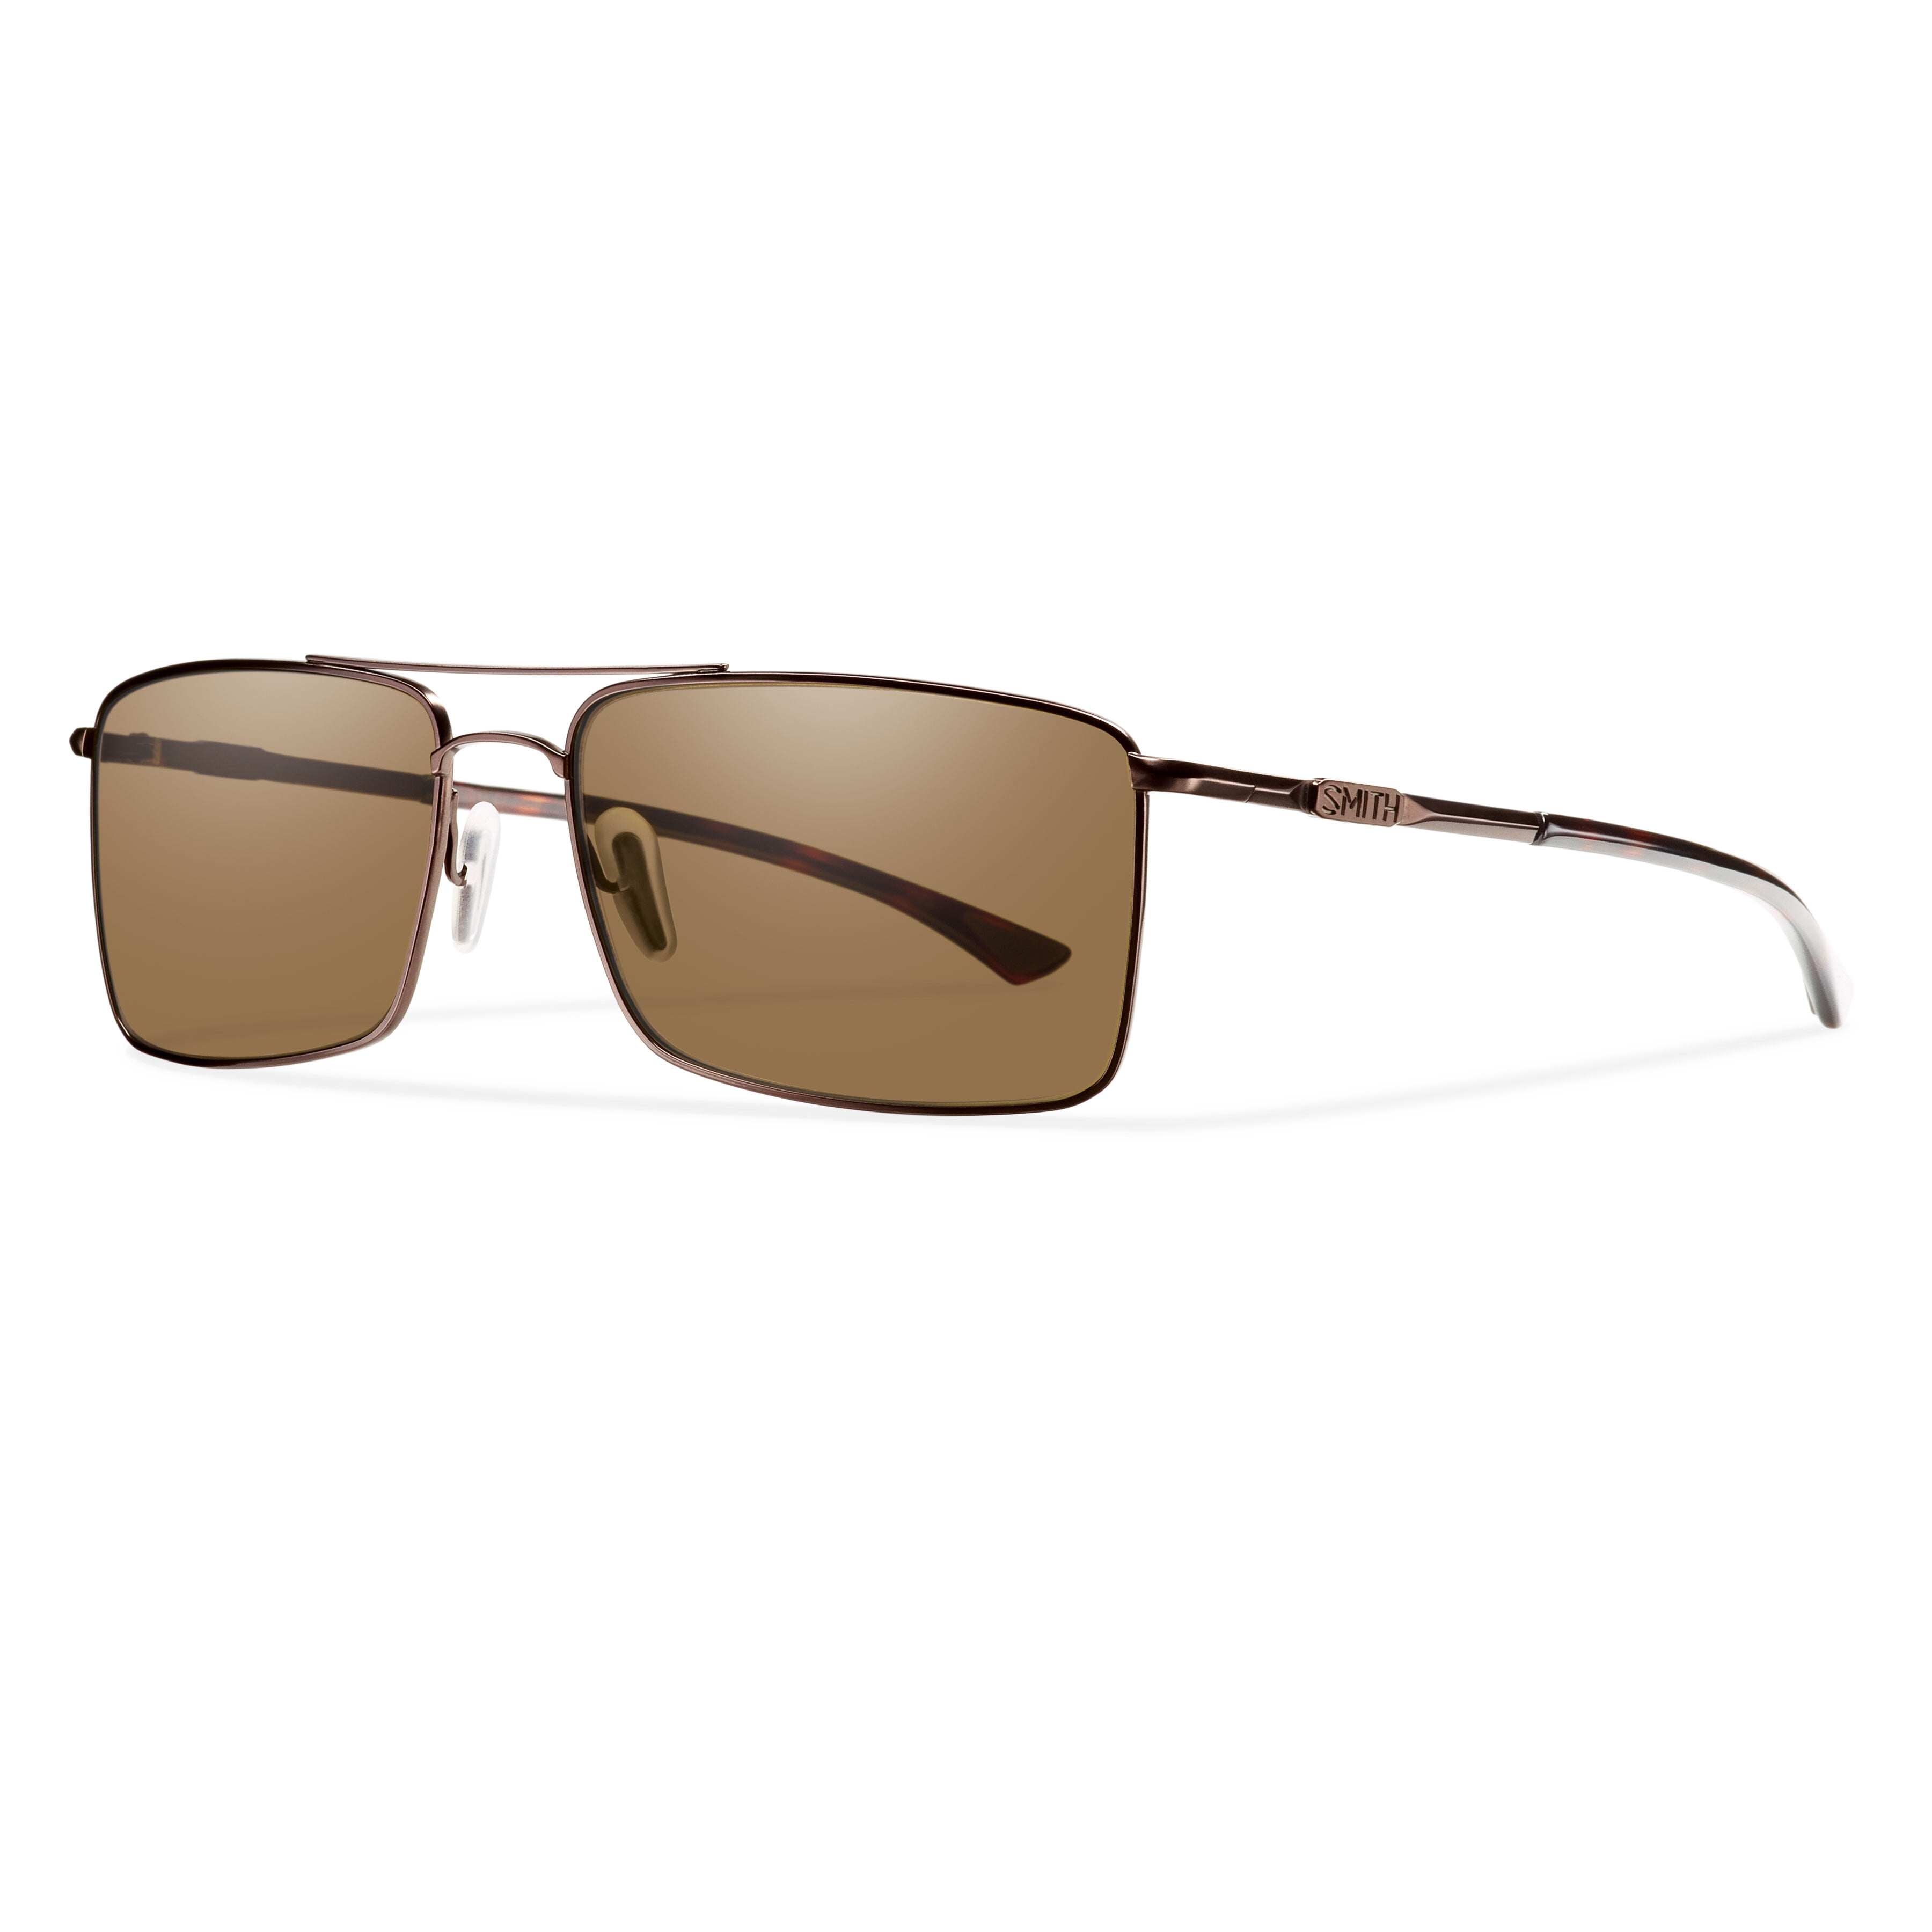 Adjustable Polarized Titanium Fishing Sunglasses Outdoor Glasses Brown 